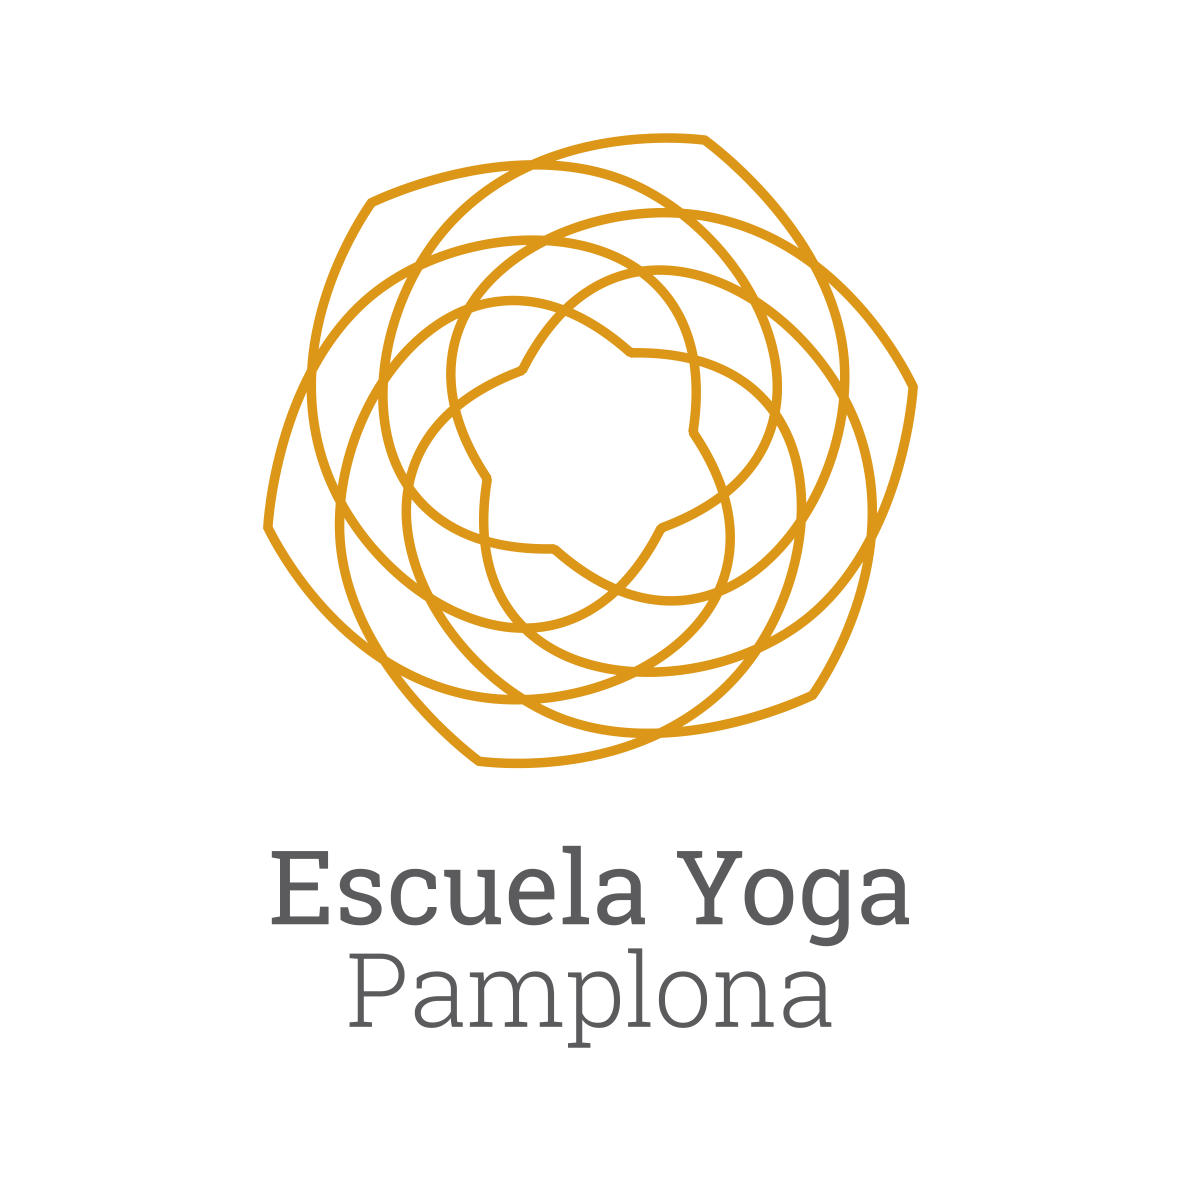 Escuela Yoga Pamplona